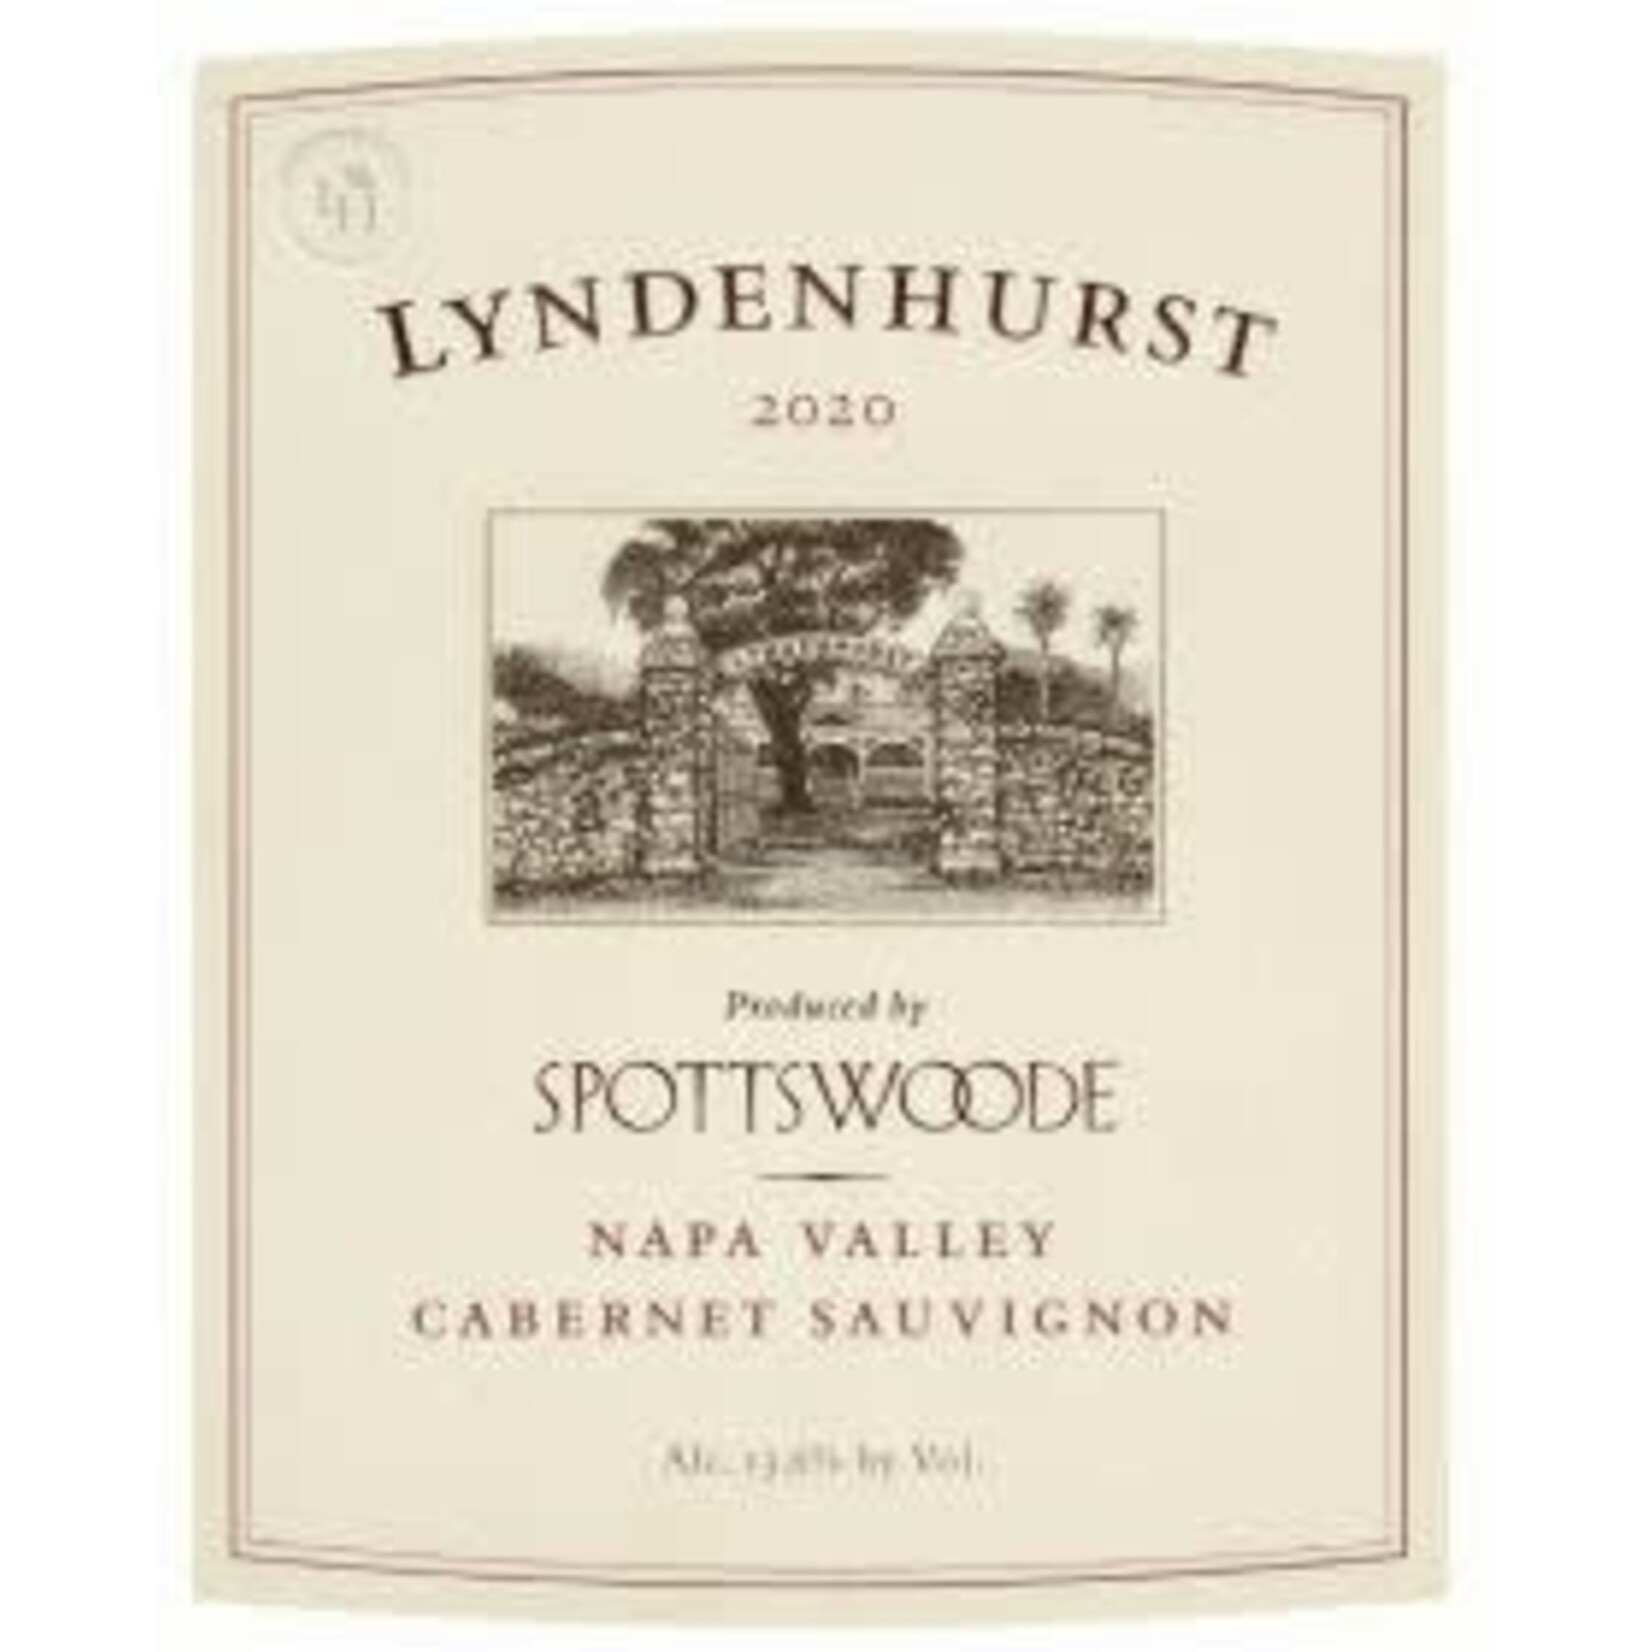 Spottswoode Spottswoode Lyndenhurst Cabernet Sauvigon 2020  Napa Valley, California